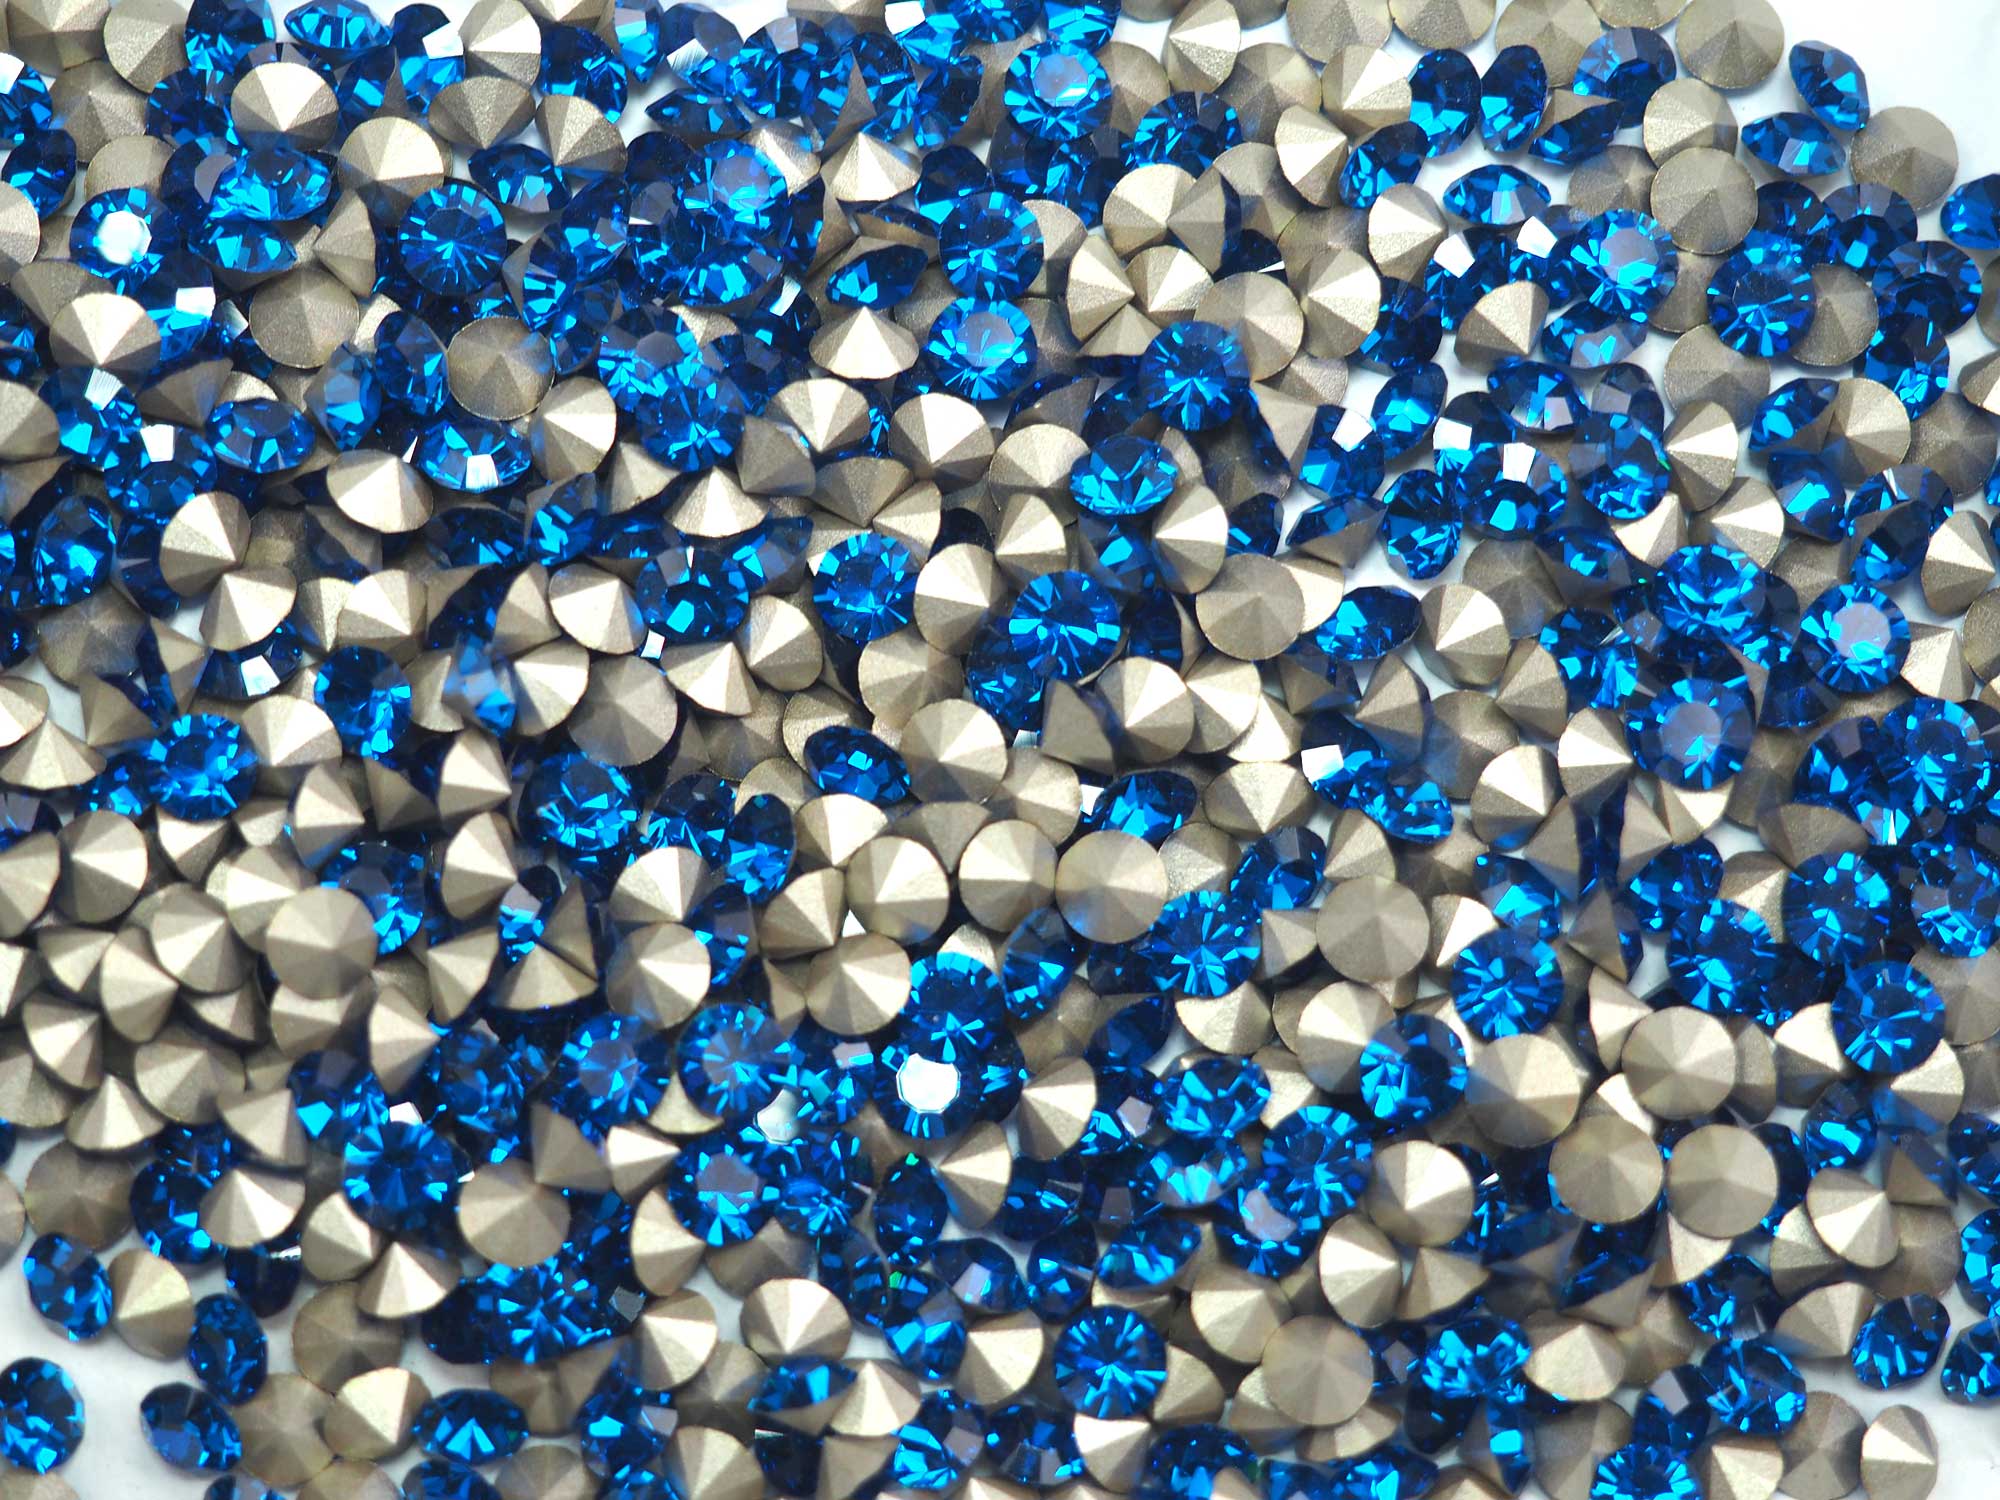 Capri Blue, Preciosa Genuine Czech MAXIMA Pointed Back Chatons in size ss23 (5.2mm, 0.2inch), 72 pieces, Silver Foiled, P604